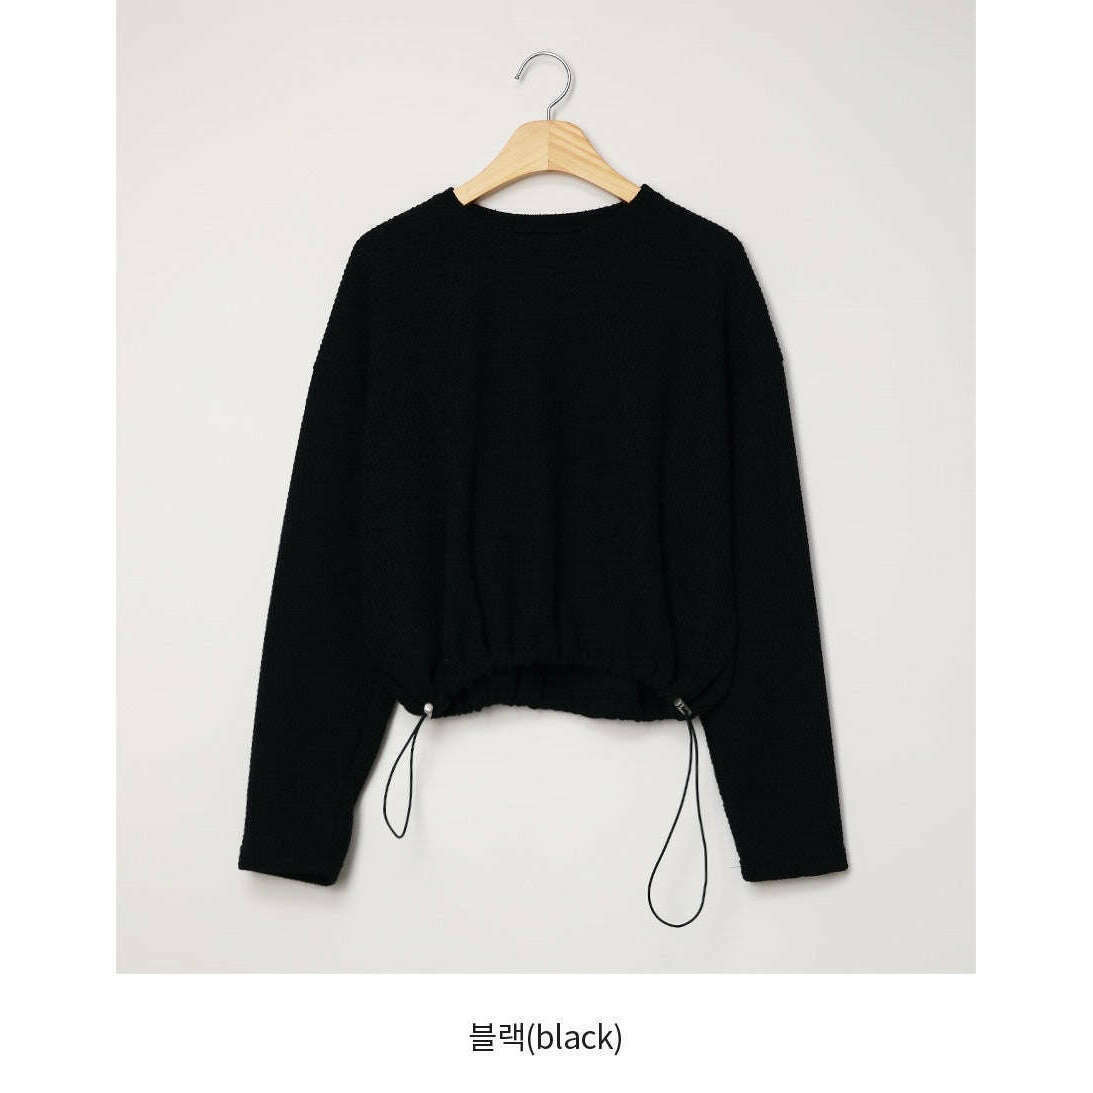 MUMMY.cc:吊帶垂感休閒連身裙配抽繩上衣套裝（單購）:Top / Black